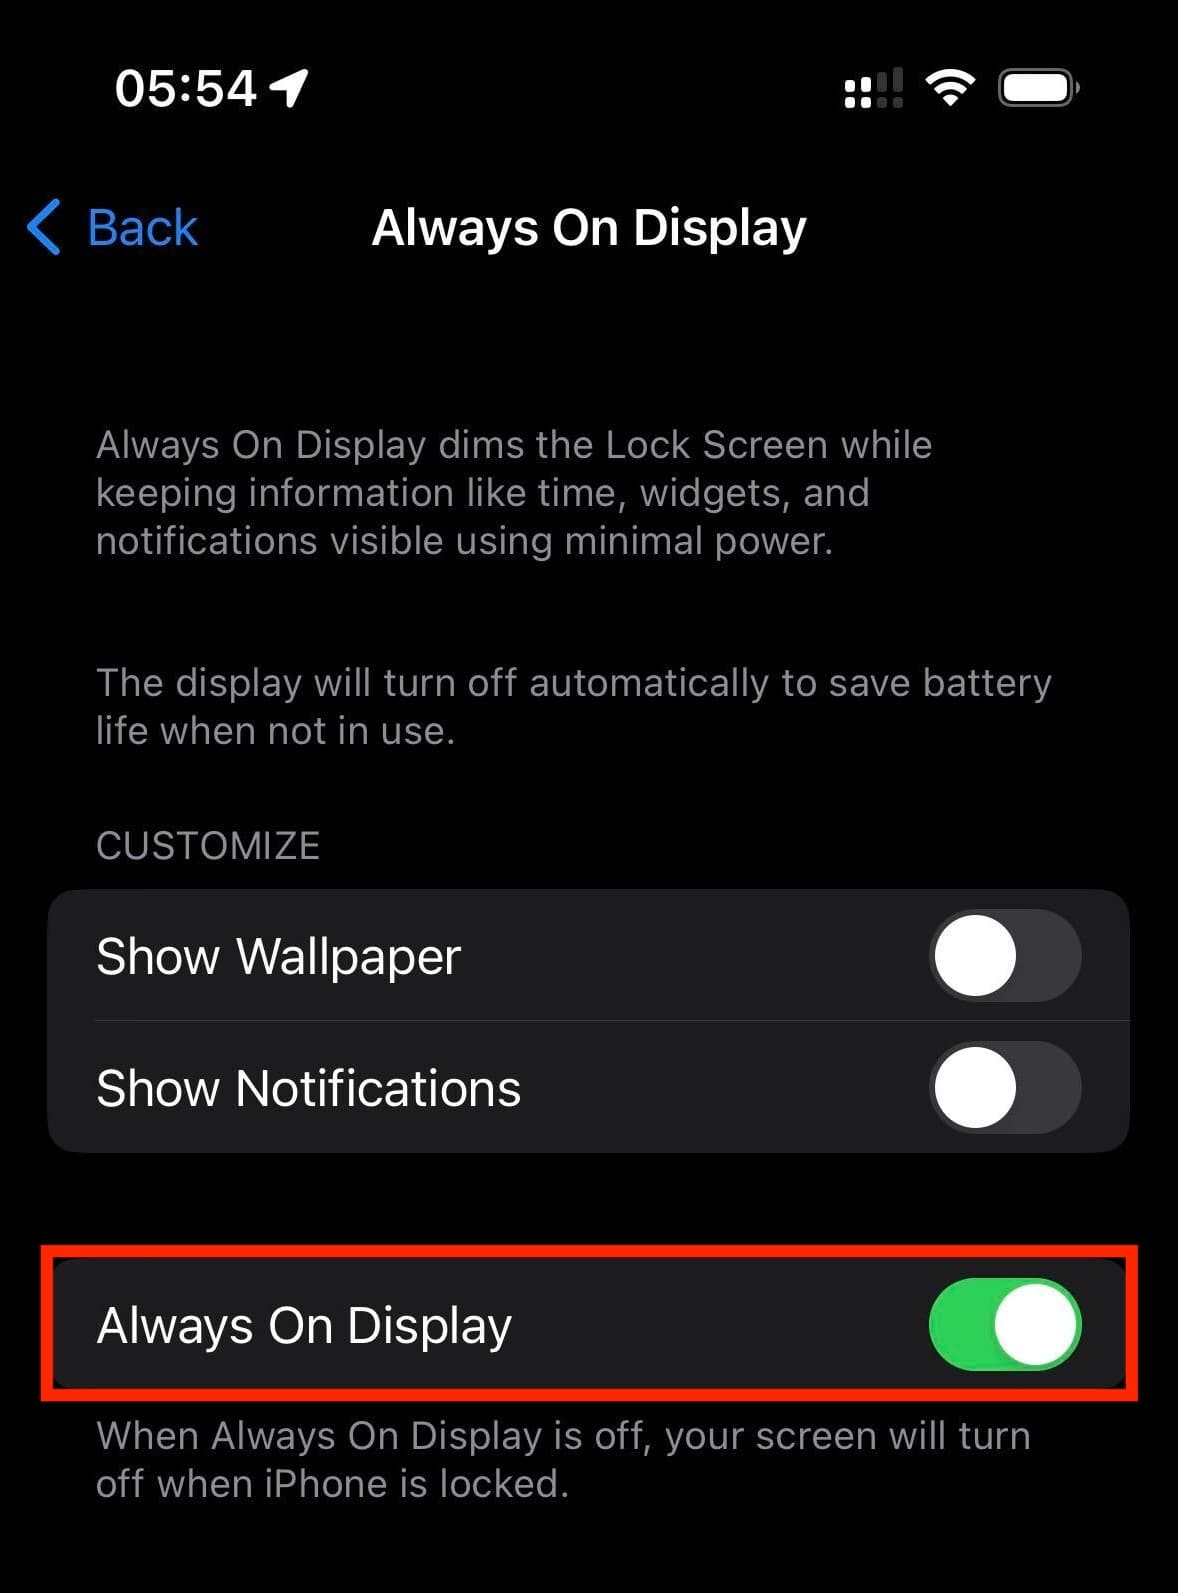 Always On Display enabled on iPhone